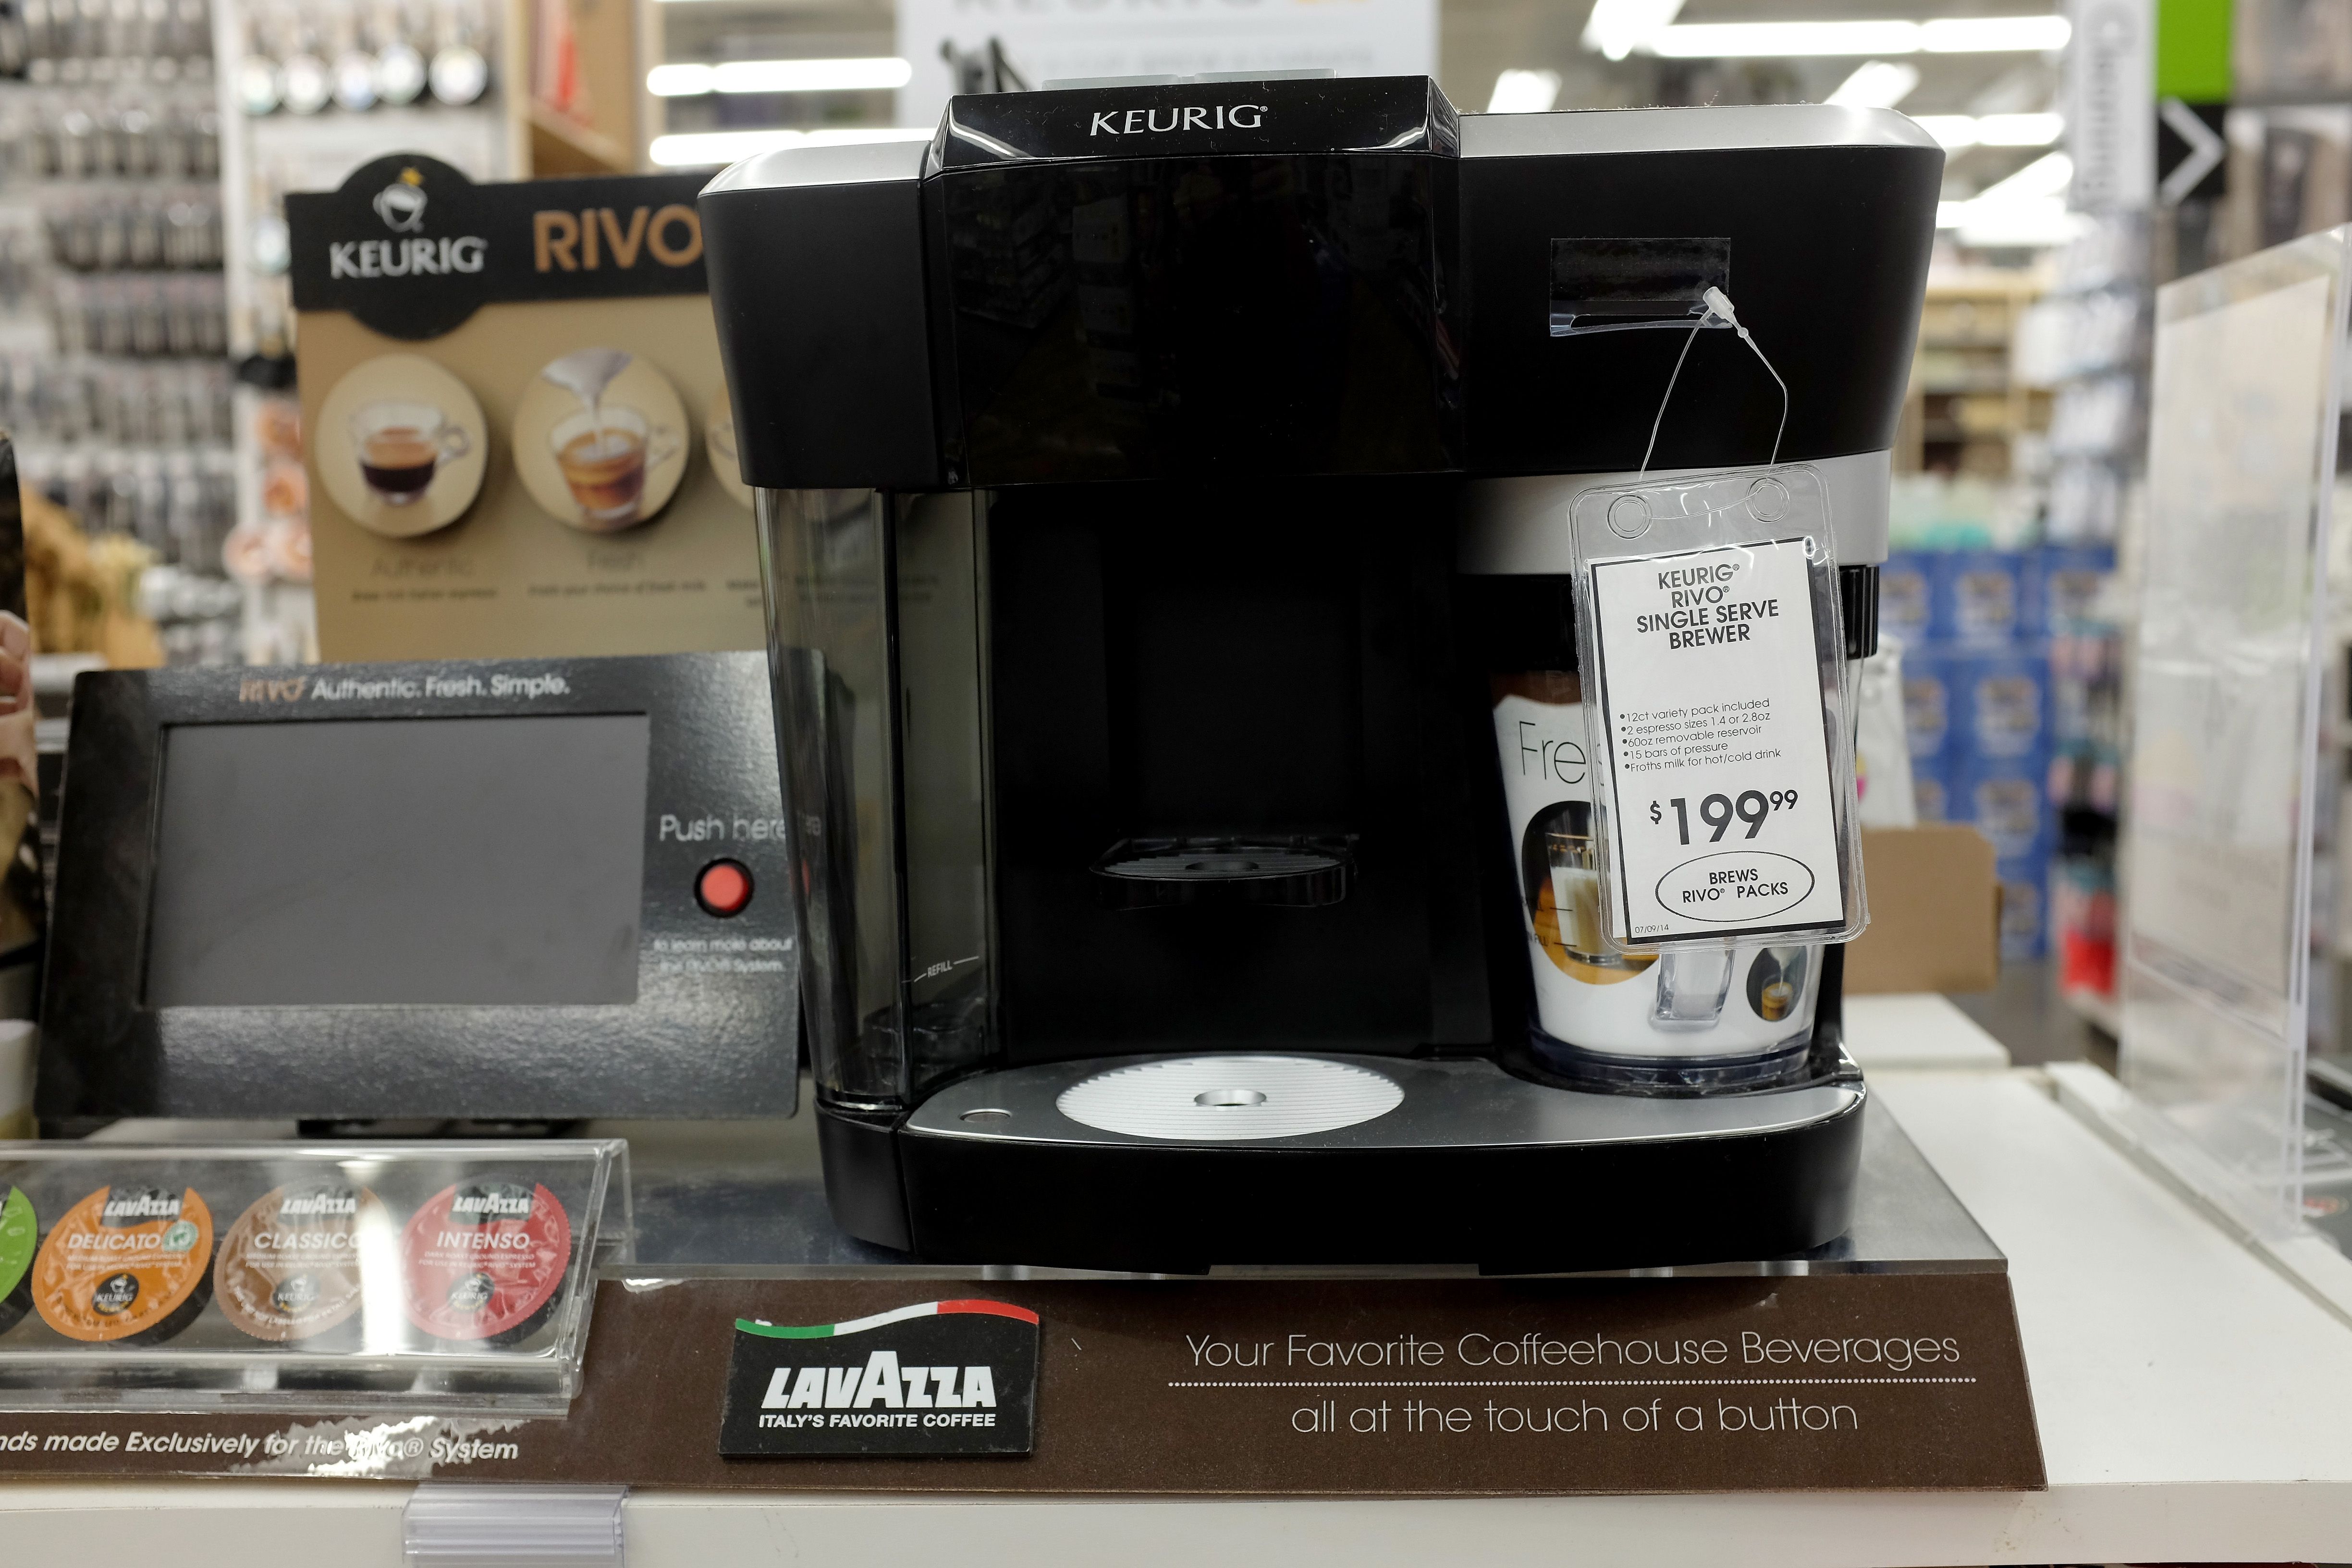 https://hips.hearstapps.com/hmg-prod/images/keurig-coffee-maker-is-seen-for-sale-on-a-store-shelf-on-news-photo-1574372564.jpg